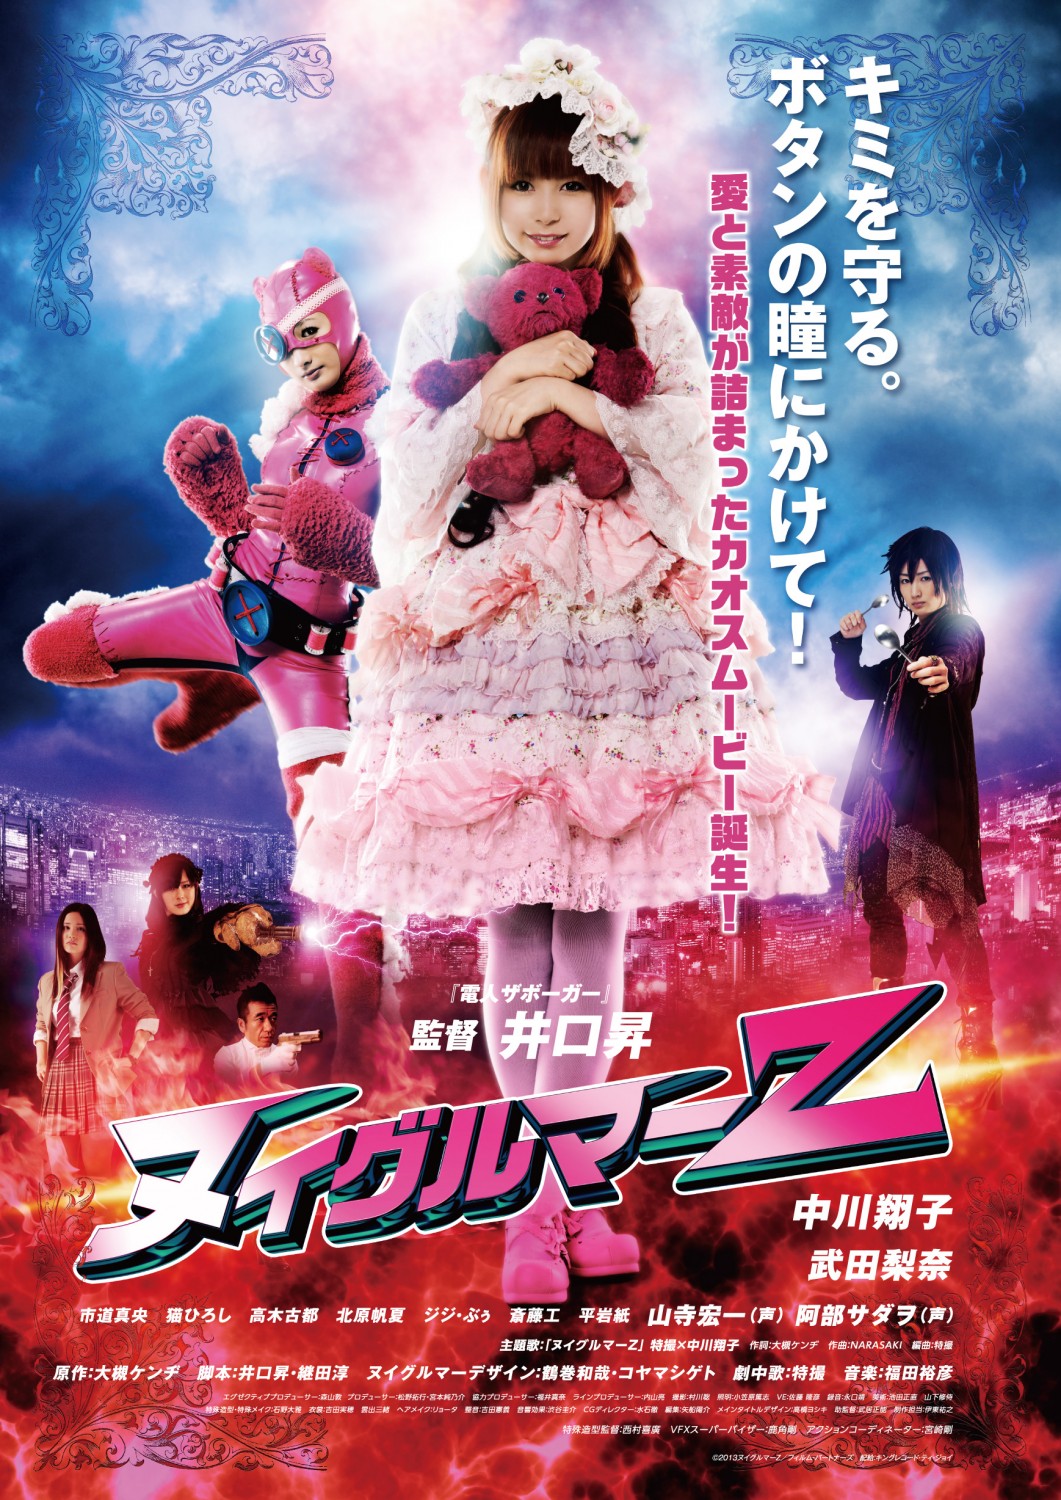 Extra Large Movie Poster Image for Nuigurumâ Z (#1 of 3)